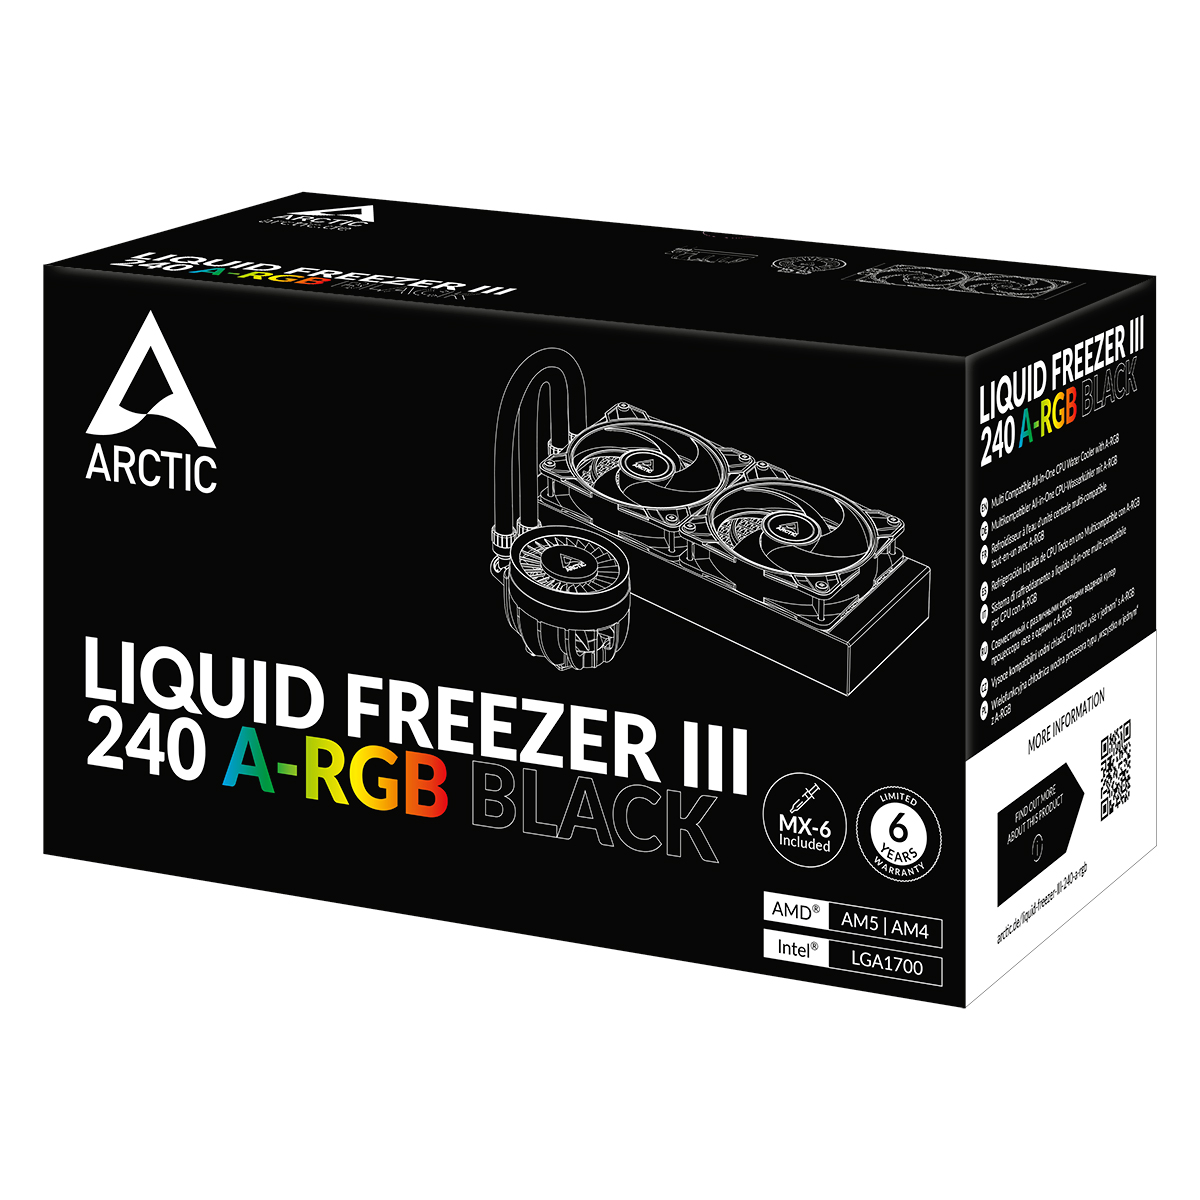 ARCTIC Liquid Freezer III 240 A-RGB 240mm 水冷散熱器 - Black 黑色